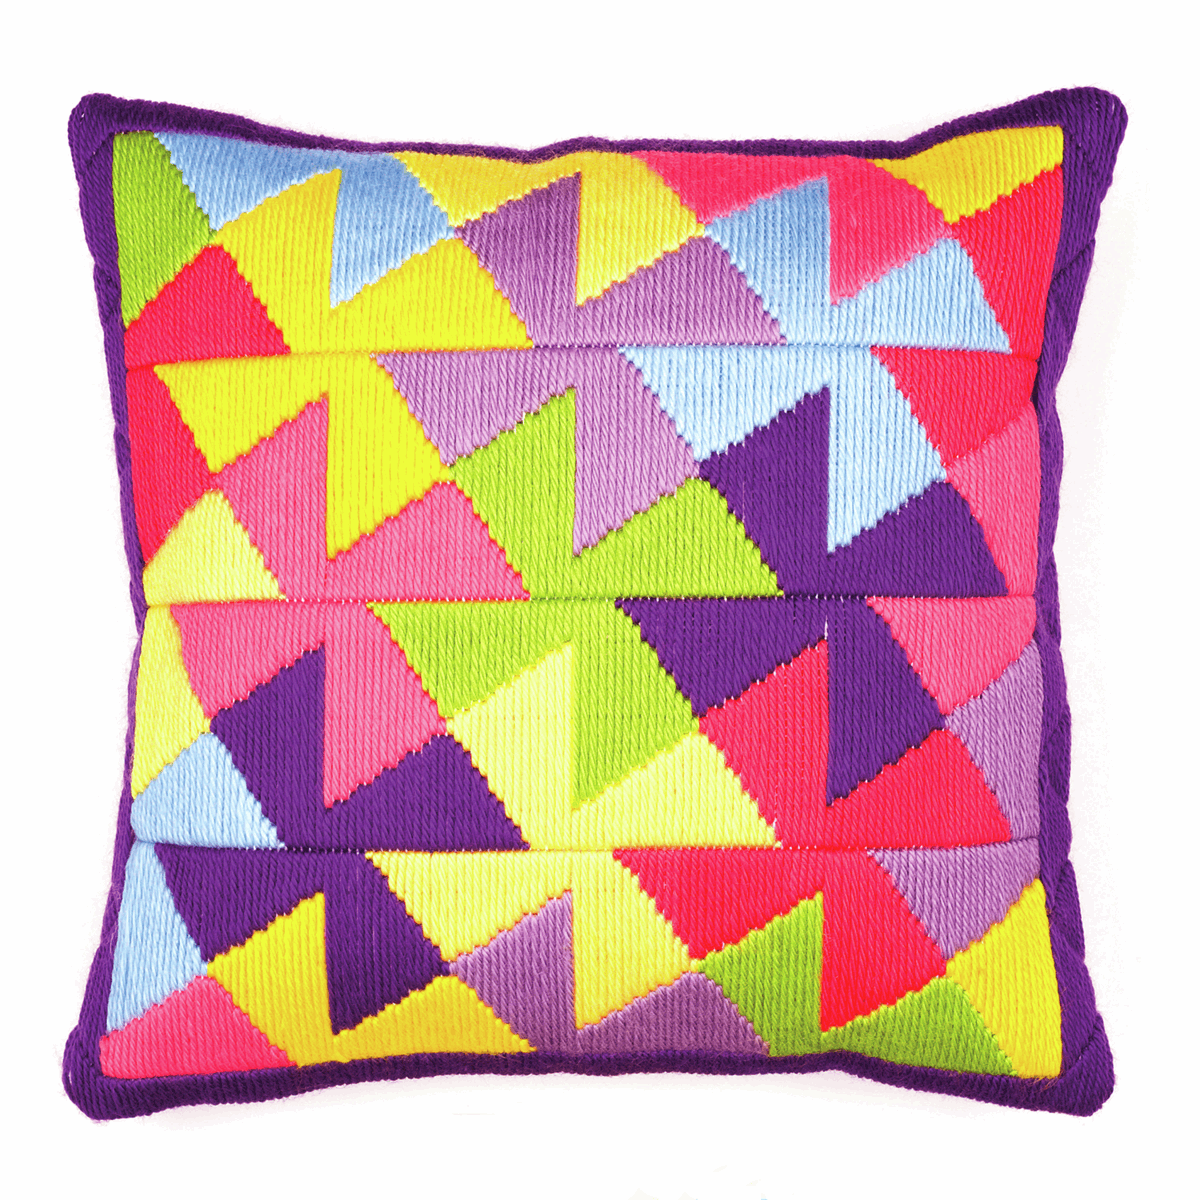 Vervaco Long Stitch Cushion Kit - Bold Geometric Style